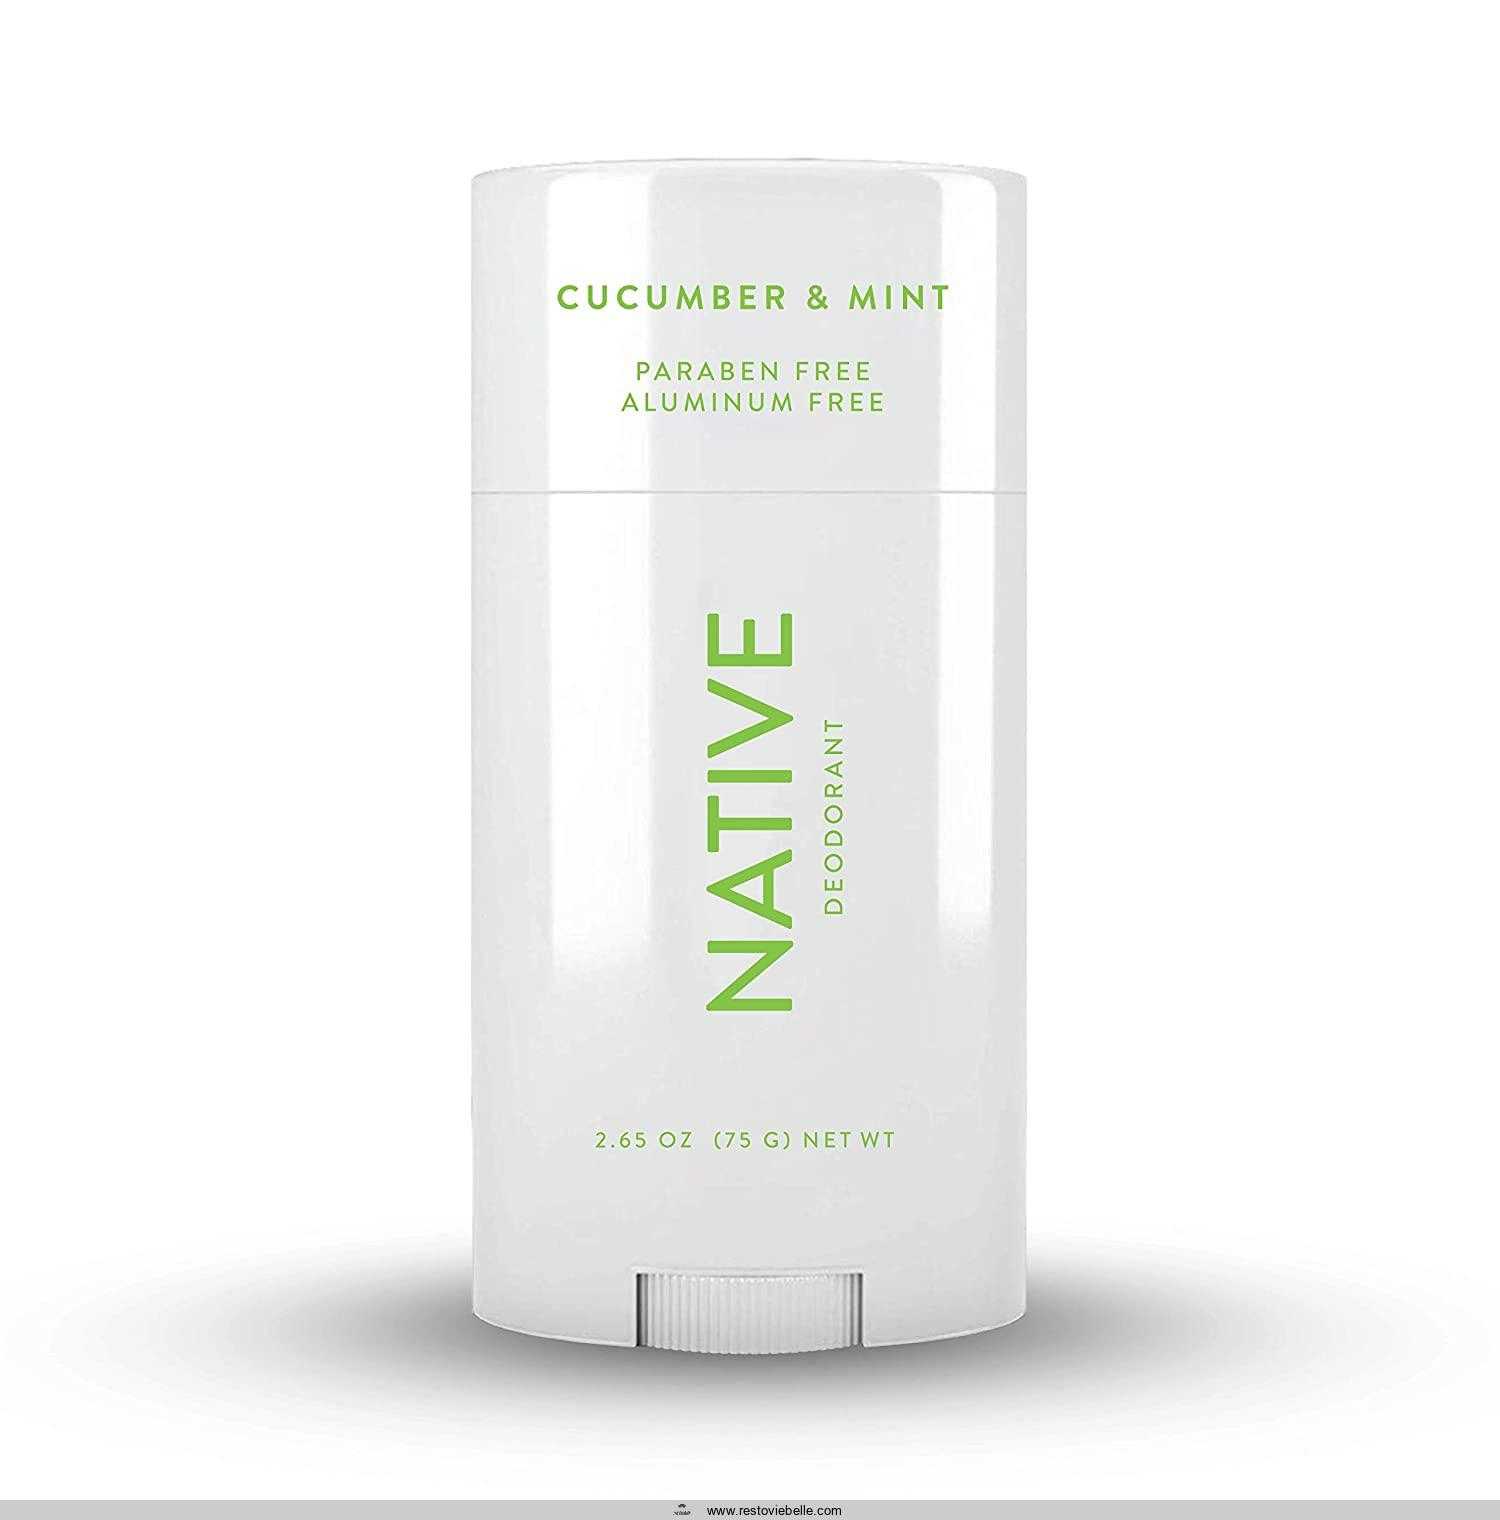  Native Natural Deodorant for Men and Women